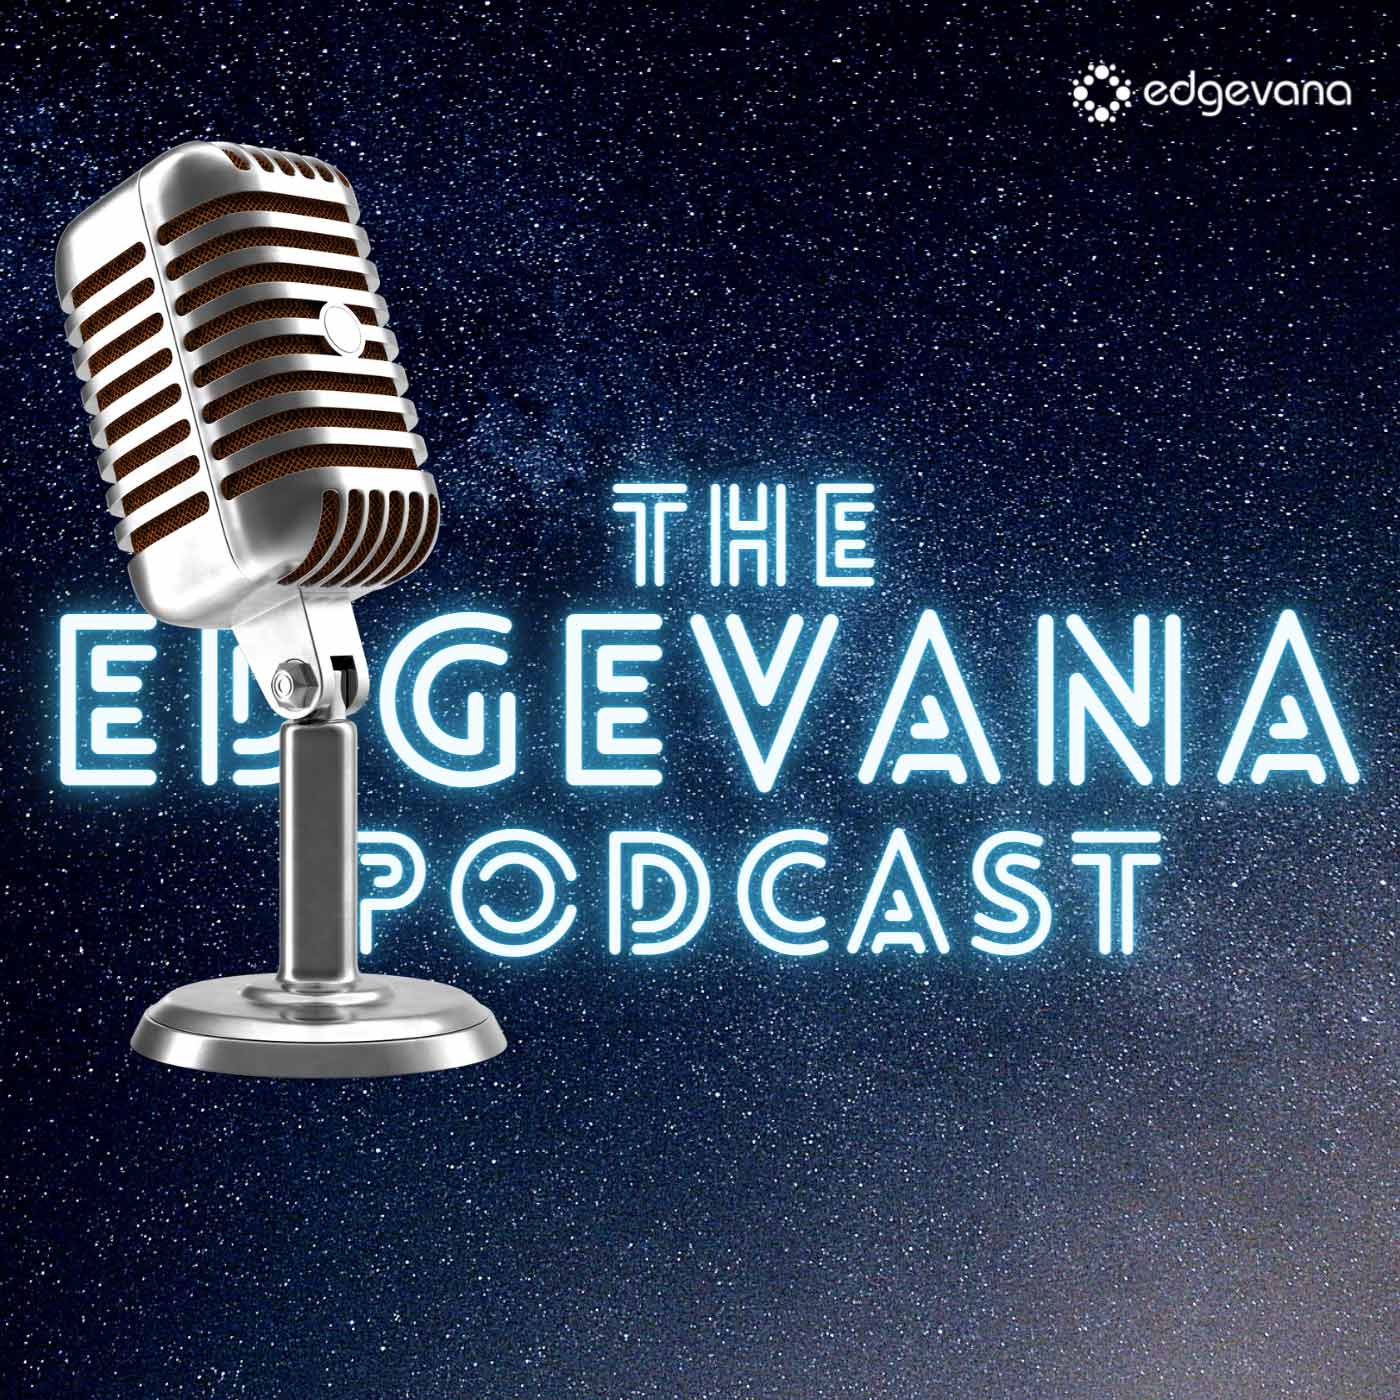 The Edgevana Podcast